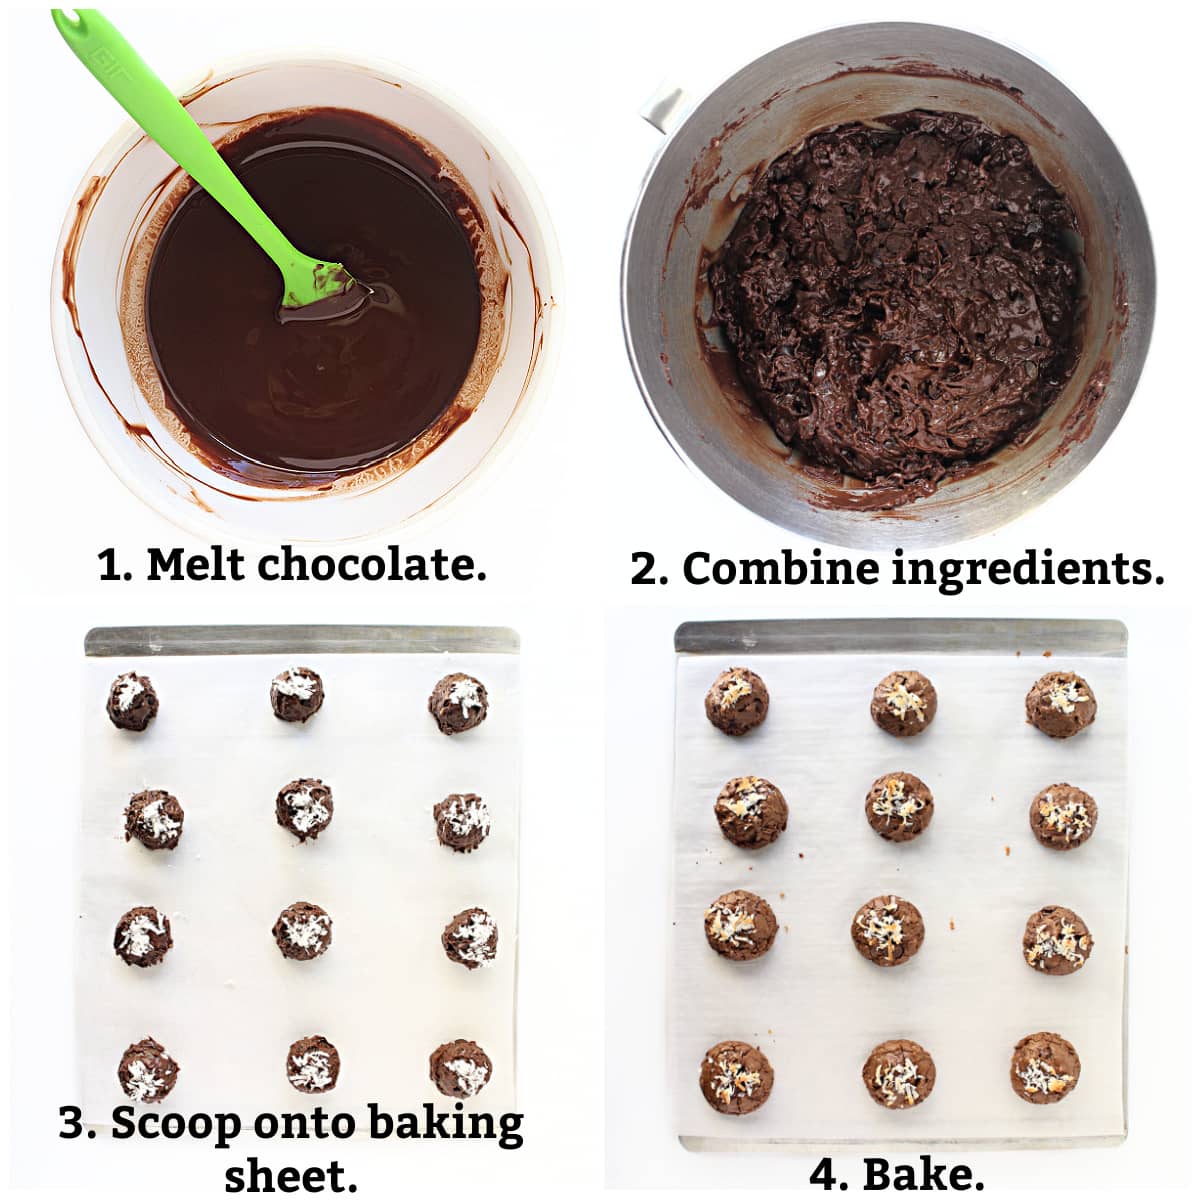 Instructions: melt chocolate, combine ingredients, scoop onto baking sheet, bake.